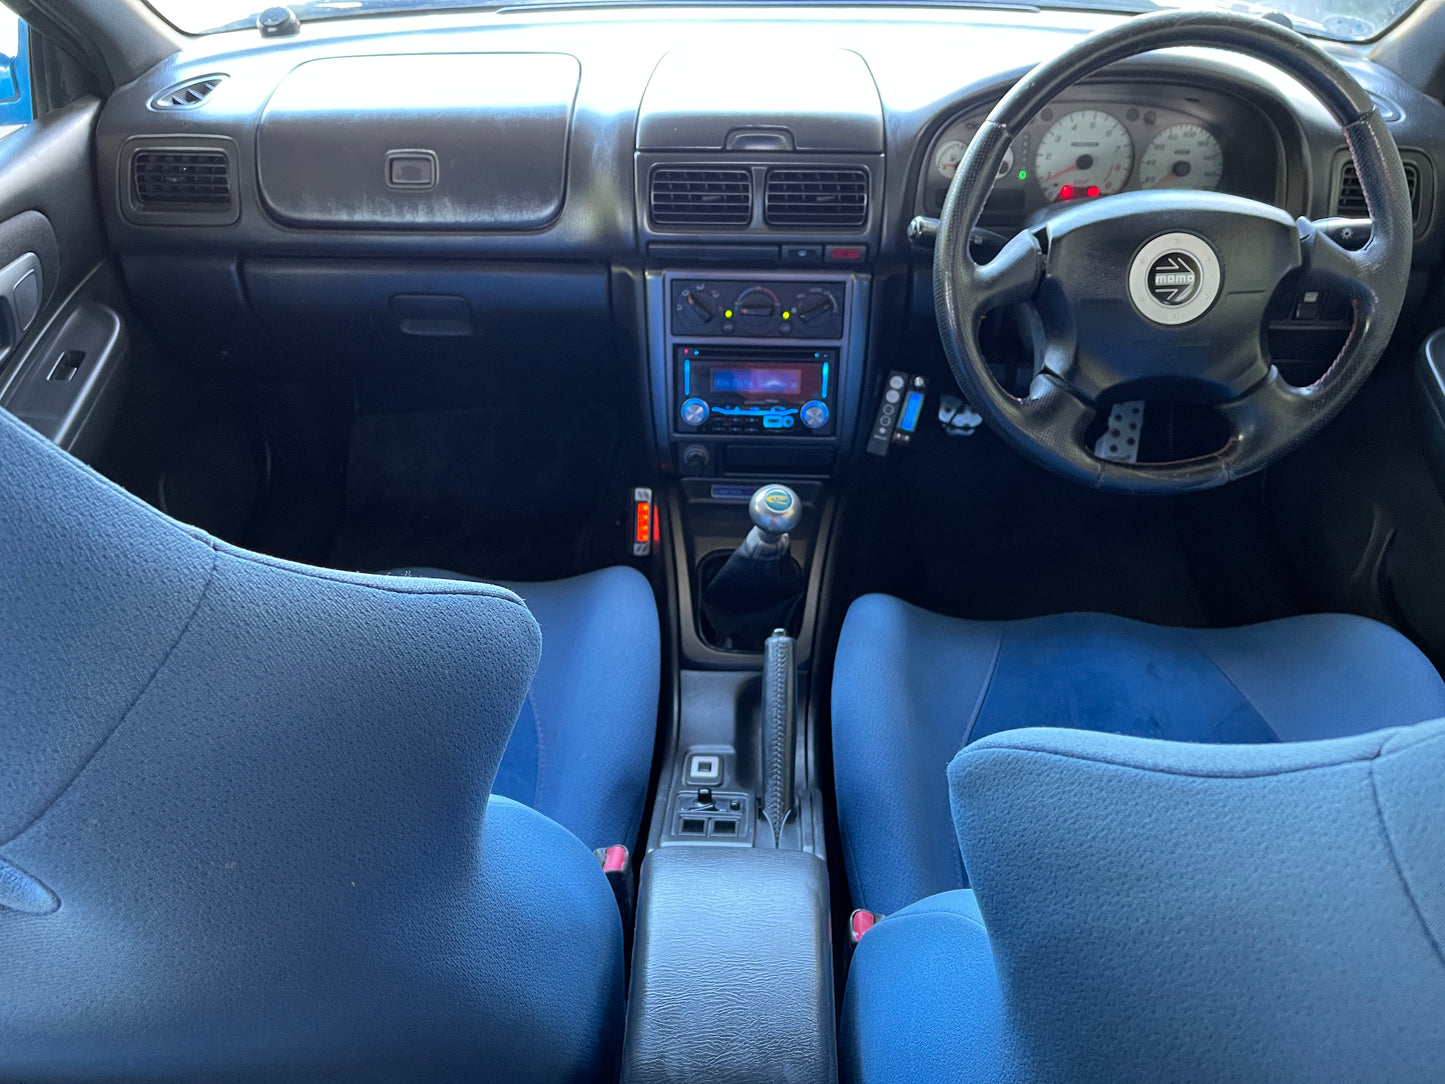 Subaru Impreza WRX STI 1998 - TYPE RA